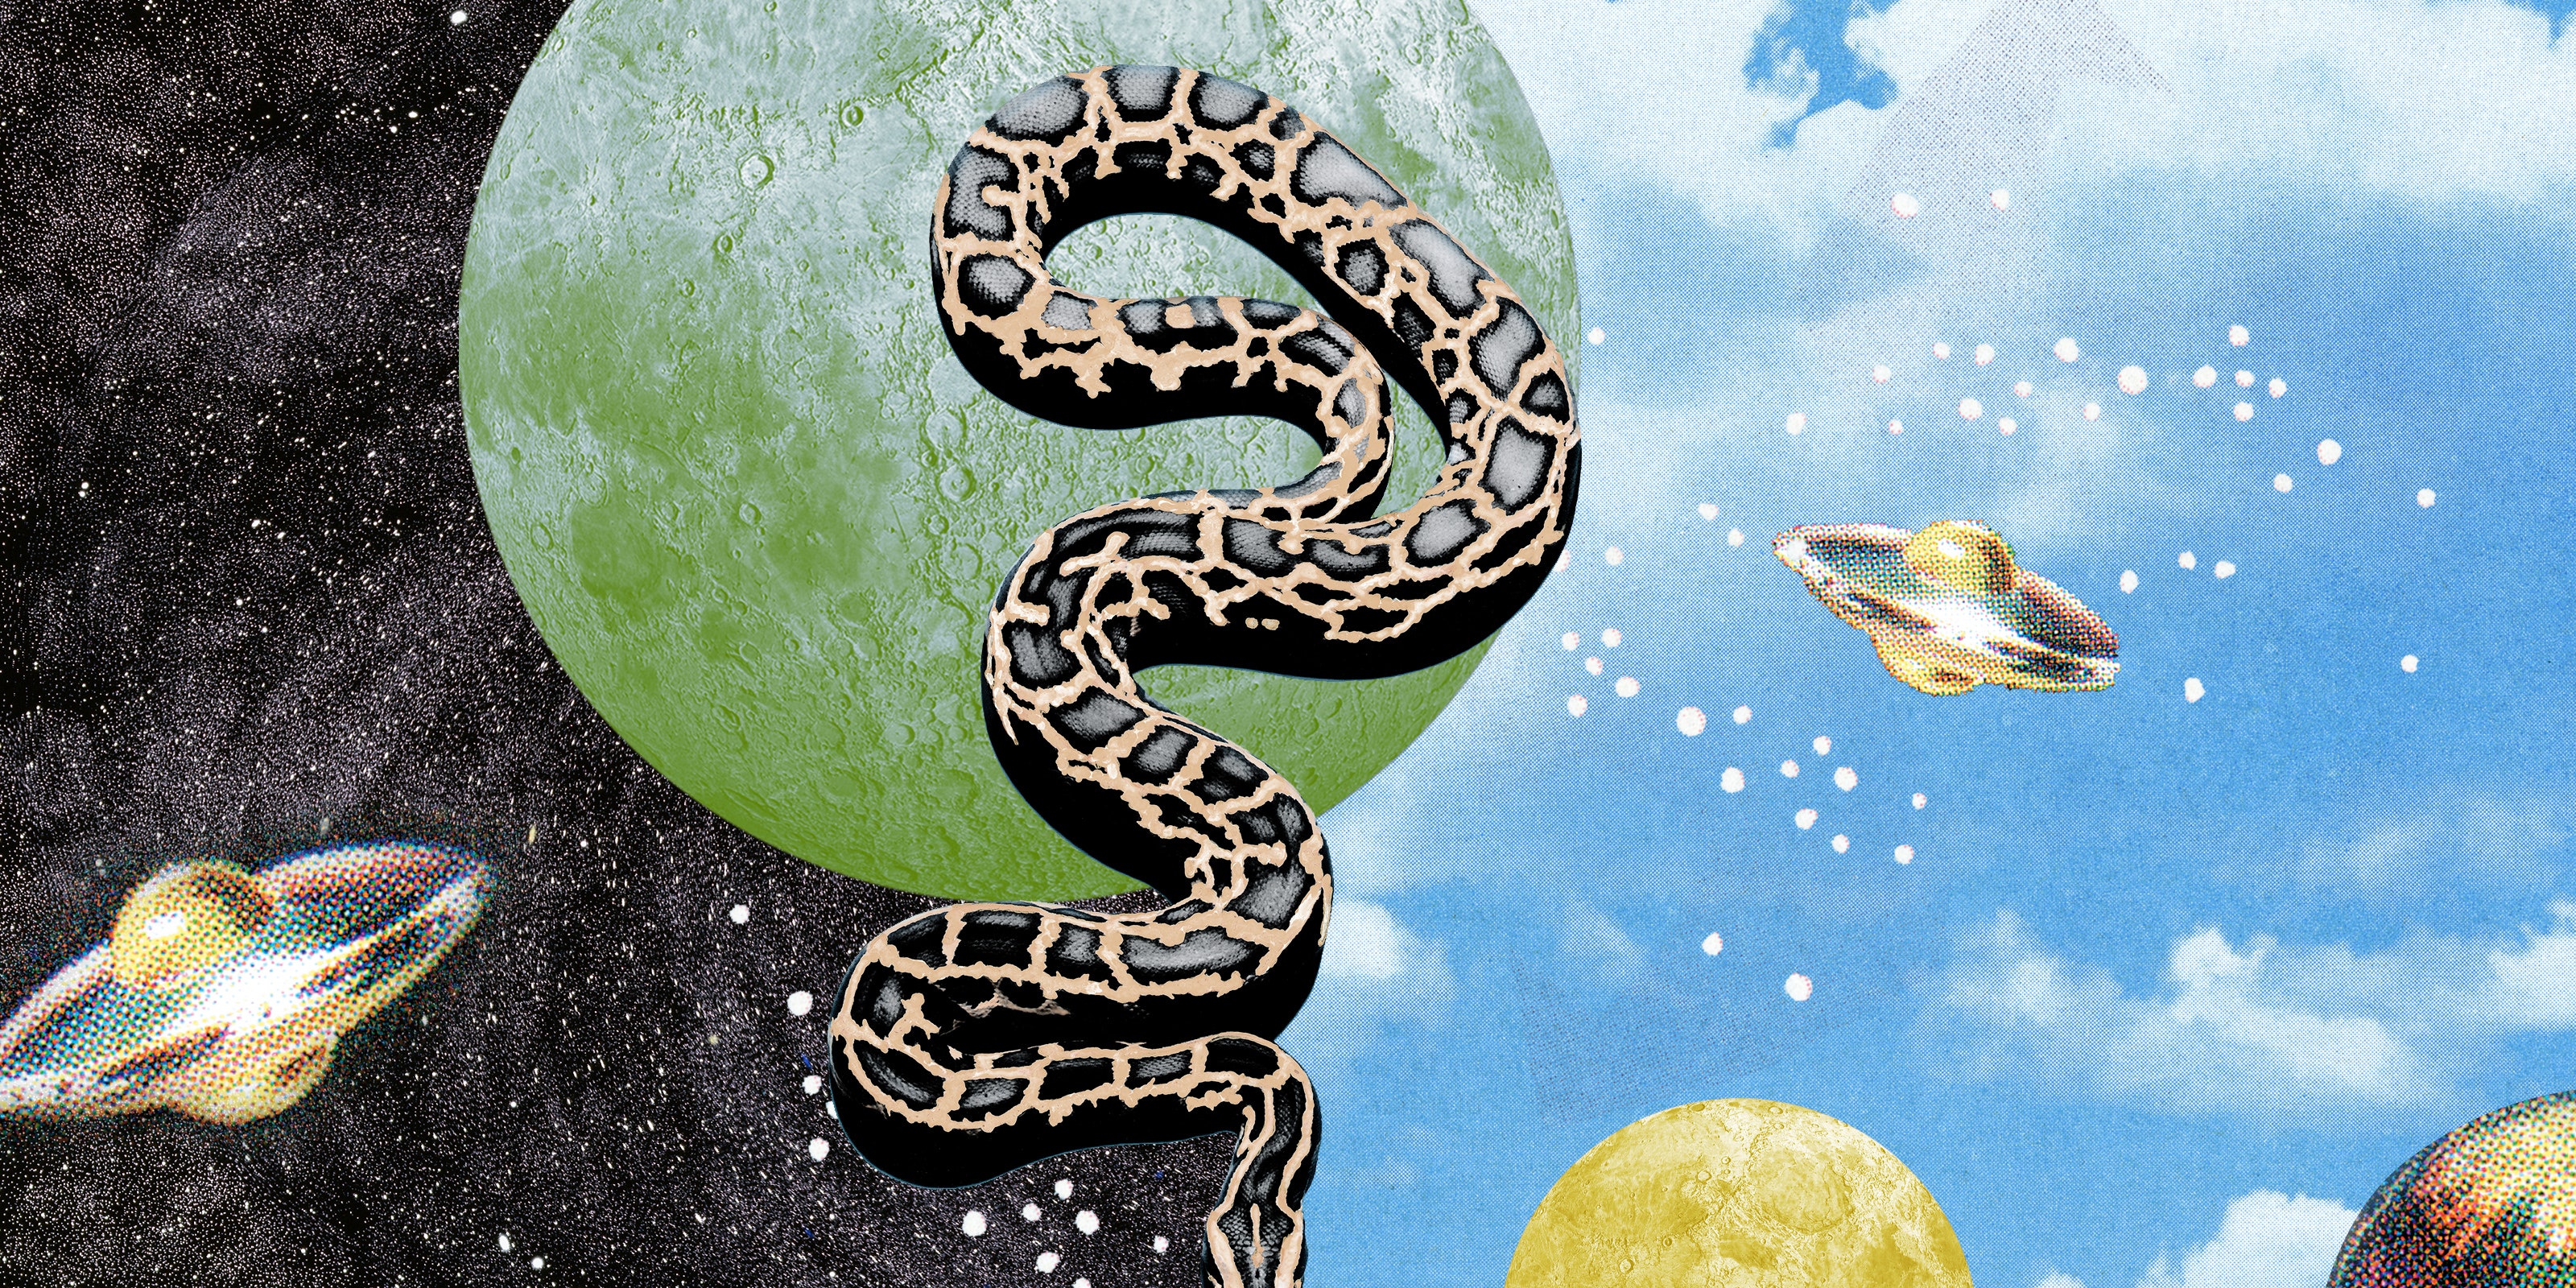 Symbolic Interpretations Of Green Snakes In Dreams